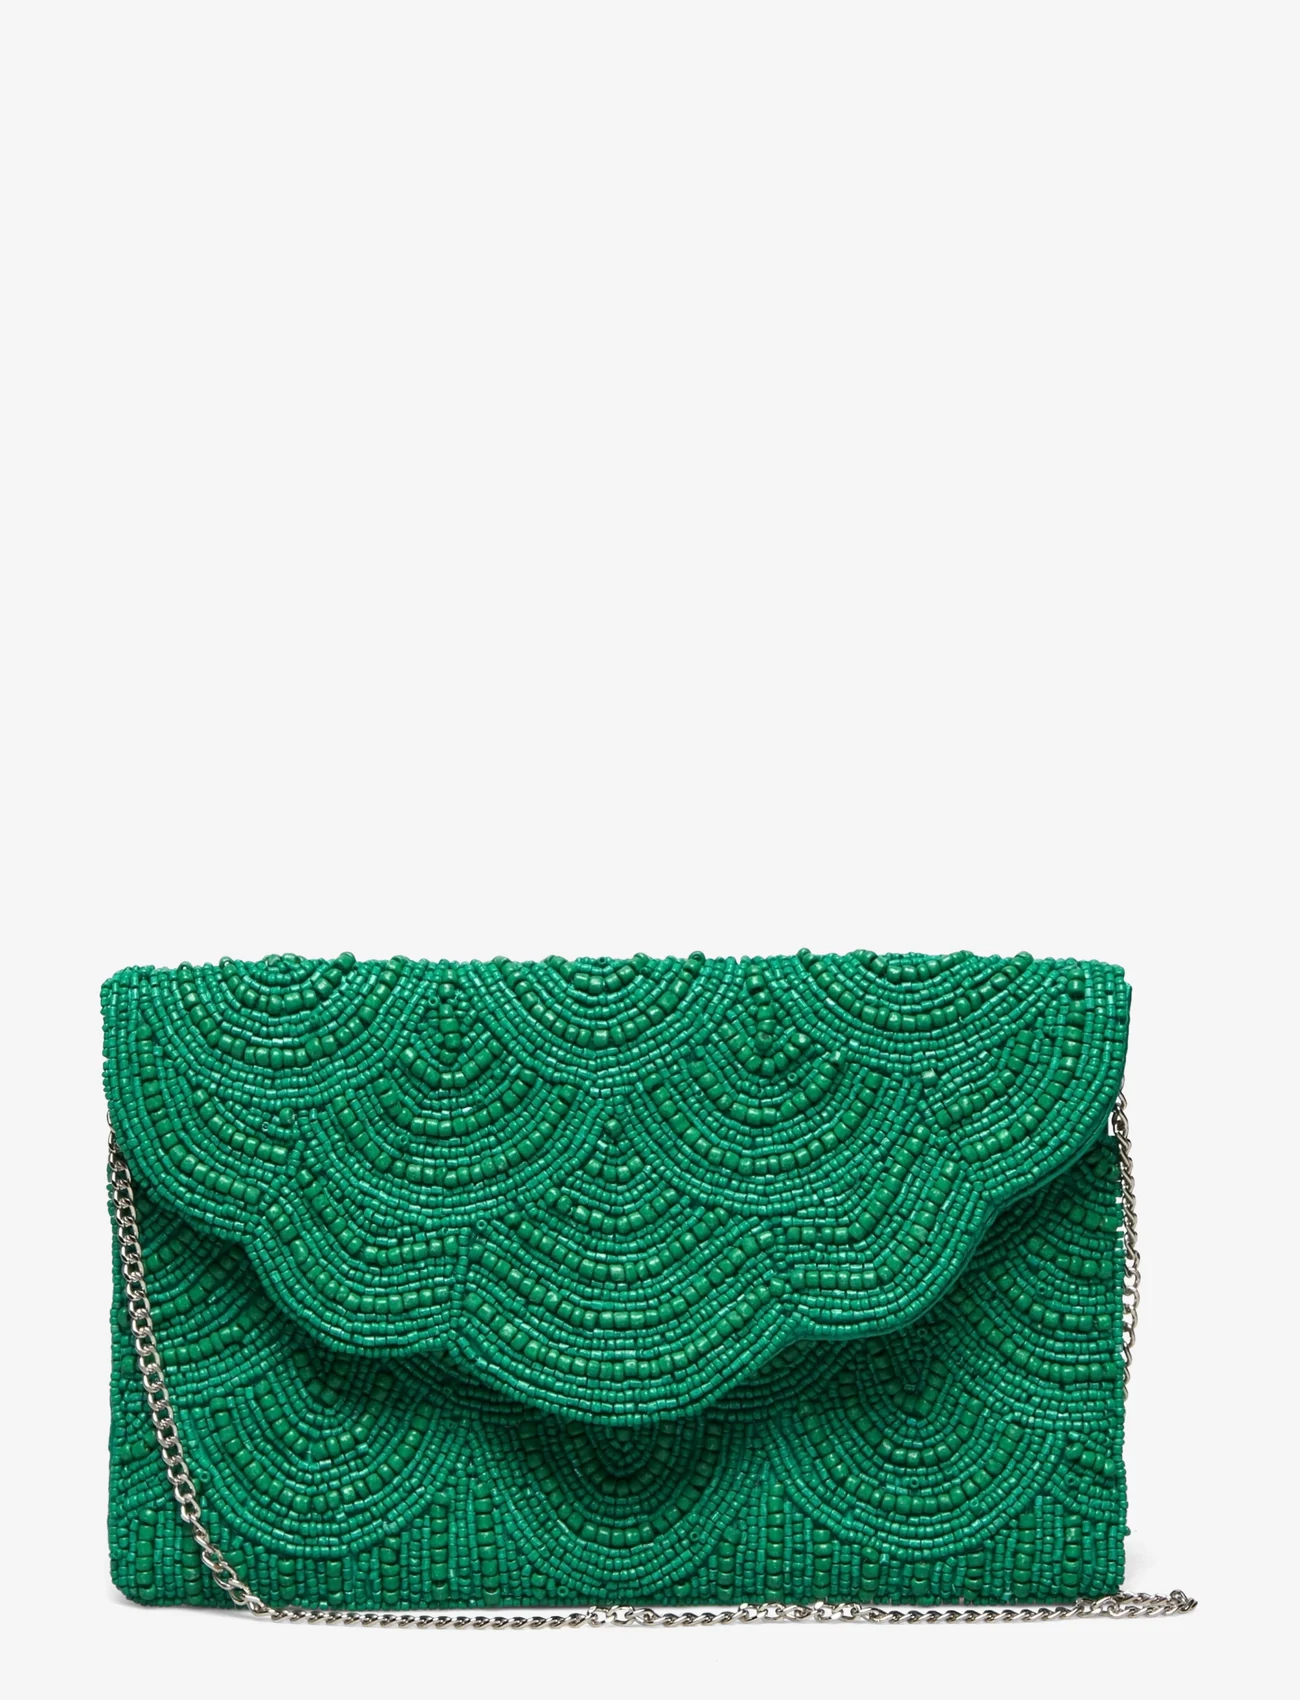 Pipol's Bazaar - Casablanca Green Clutch Bag - green - 0